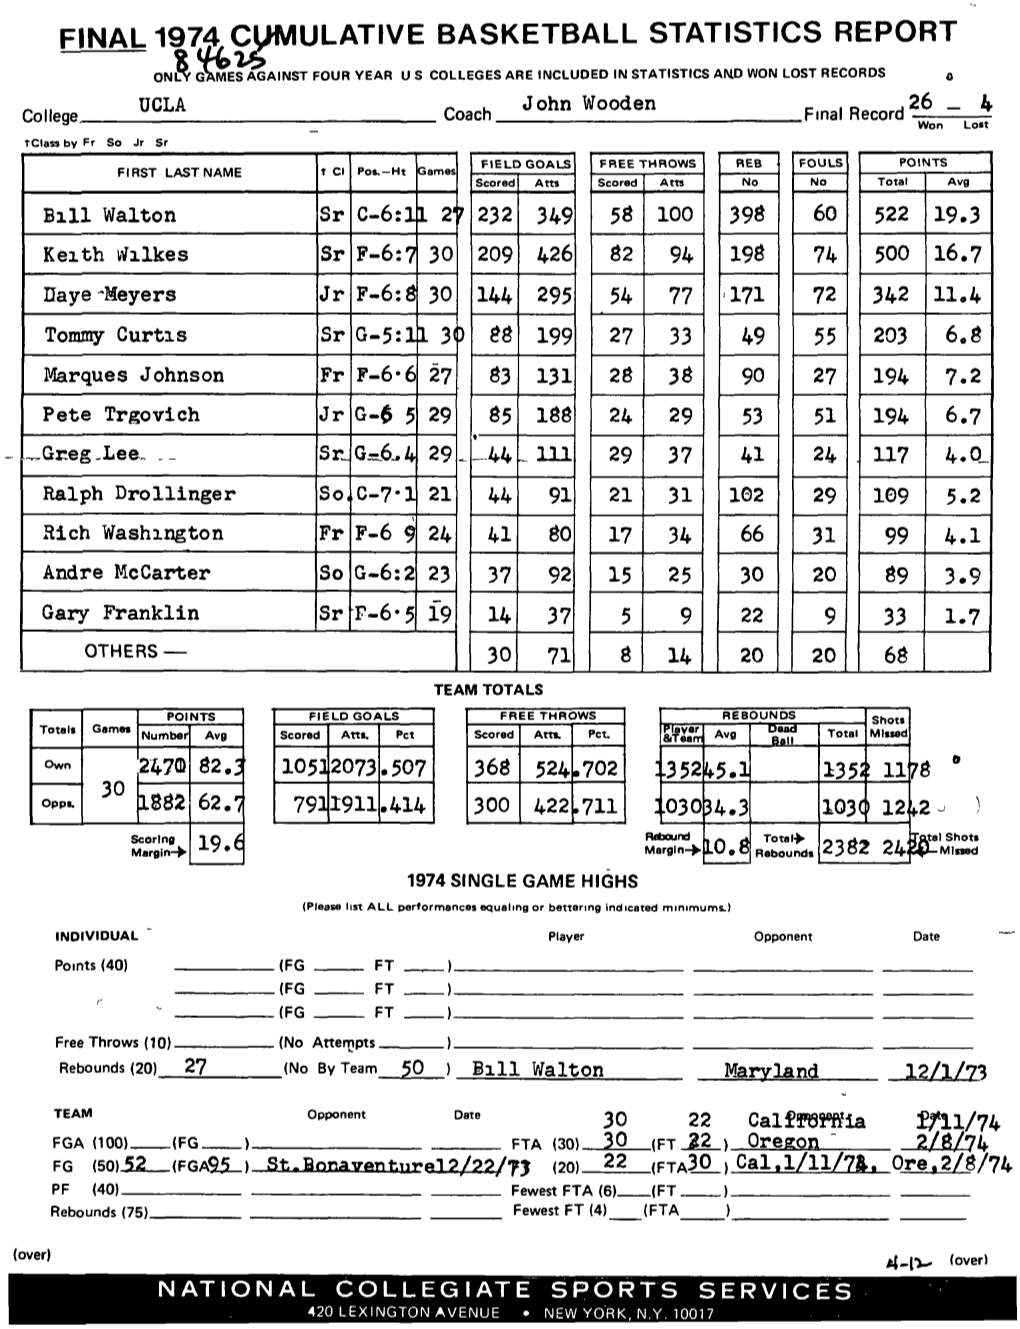 Final 1974 Cumulative Basketball Statistics Report